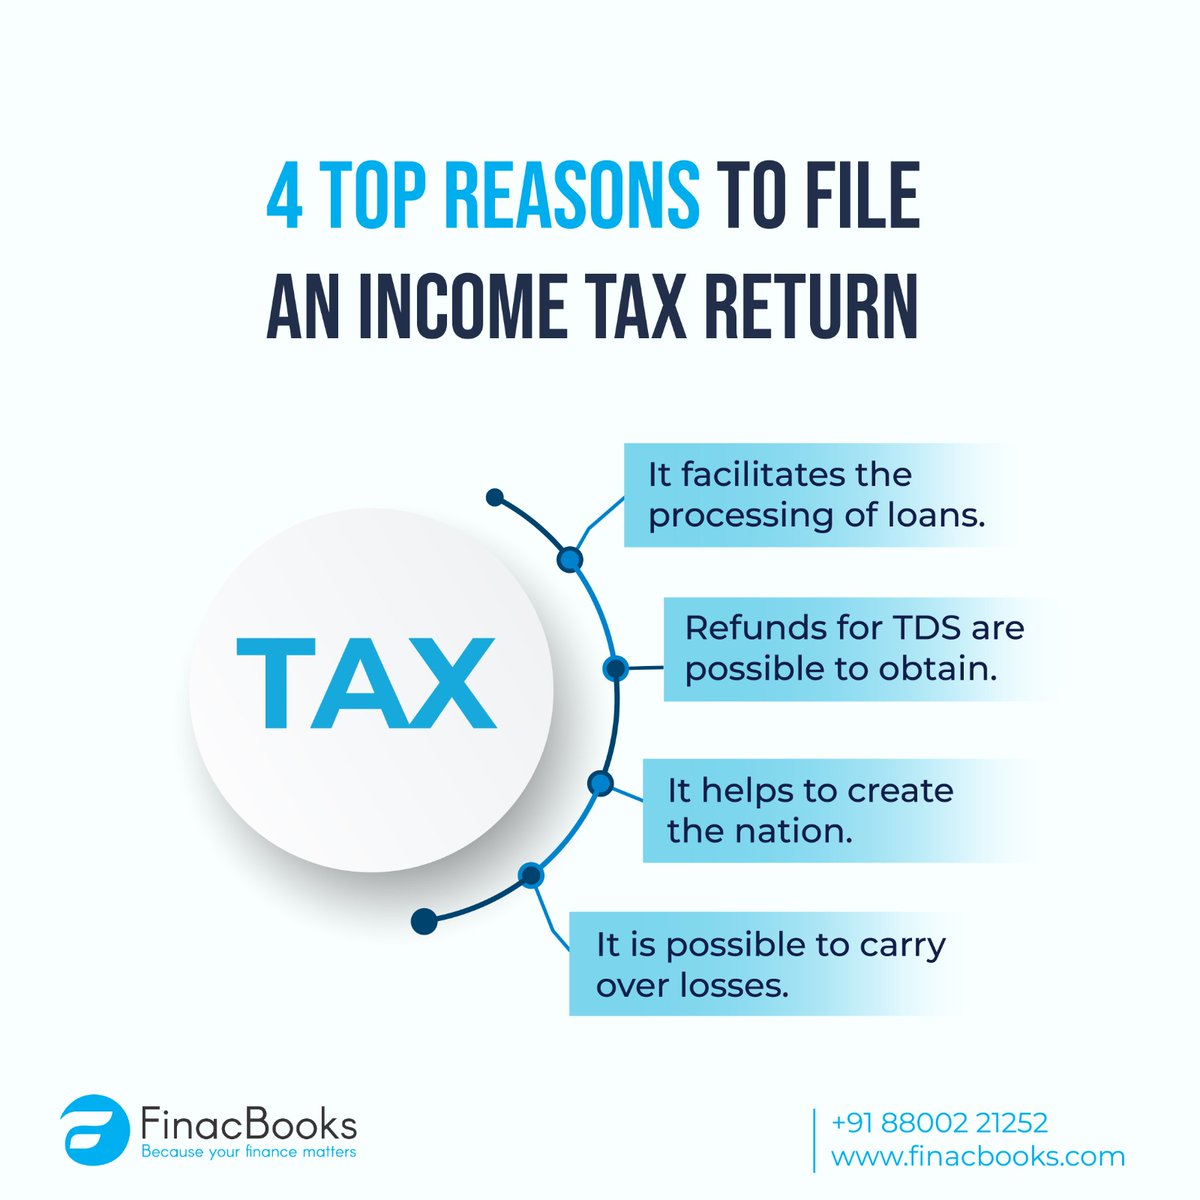 #IncomeTax #TaxSeason #FinancialPlanning #TaxRefund #LoanProcessing #NationBuilding #TaxSavings #FinancialEducation #TaxBenefits #SmartInvesting